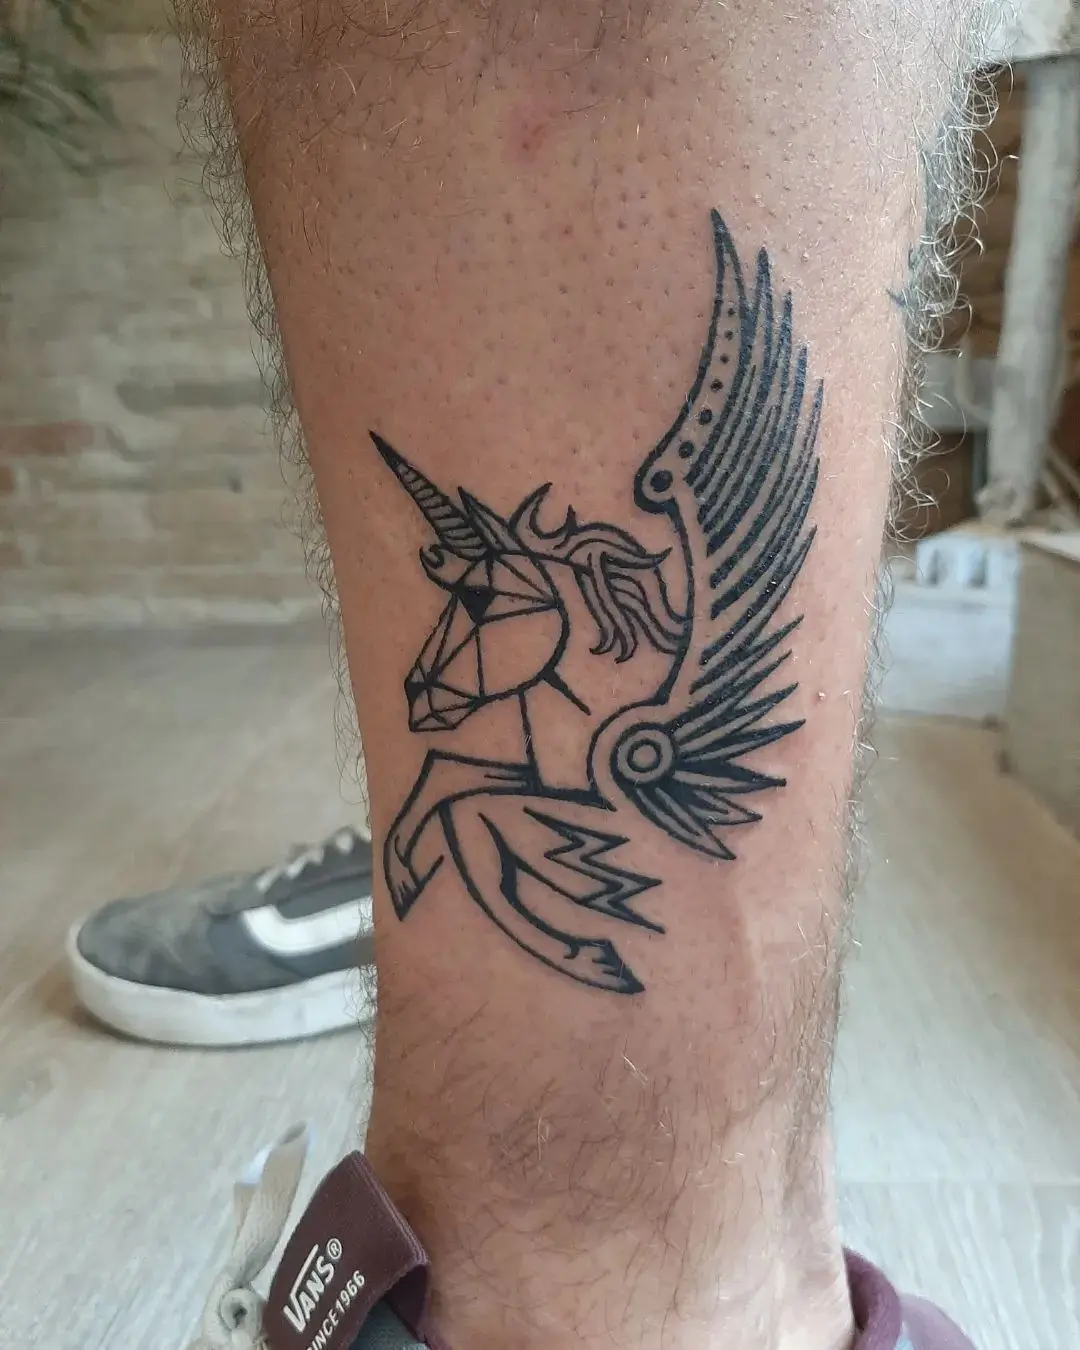 Detailed Small Unicorn Tattoo